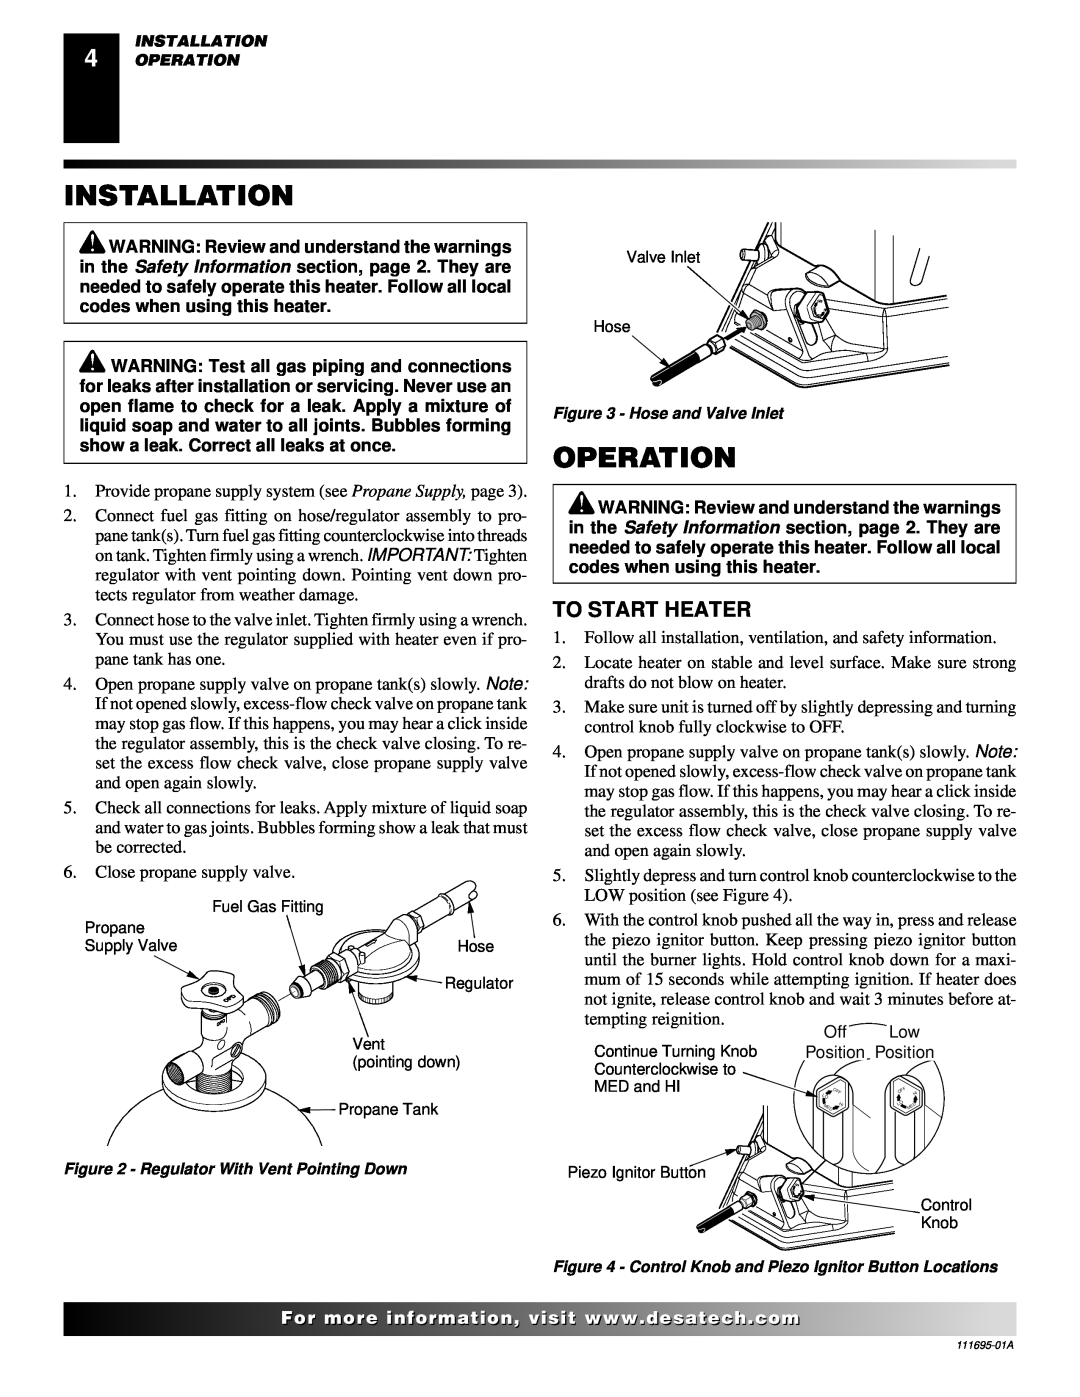 Desa 000 Btu/hr Models owner manual Installation, Operation, To Start Heater 